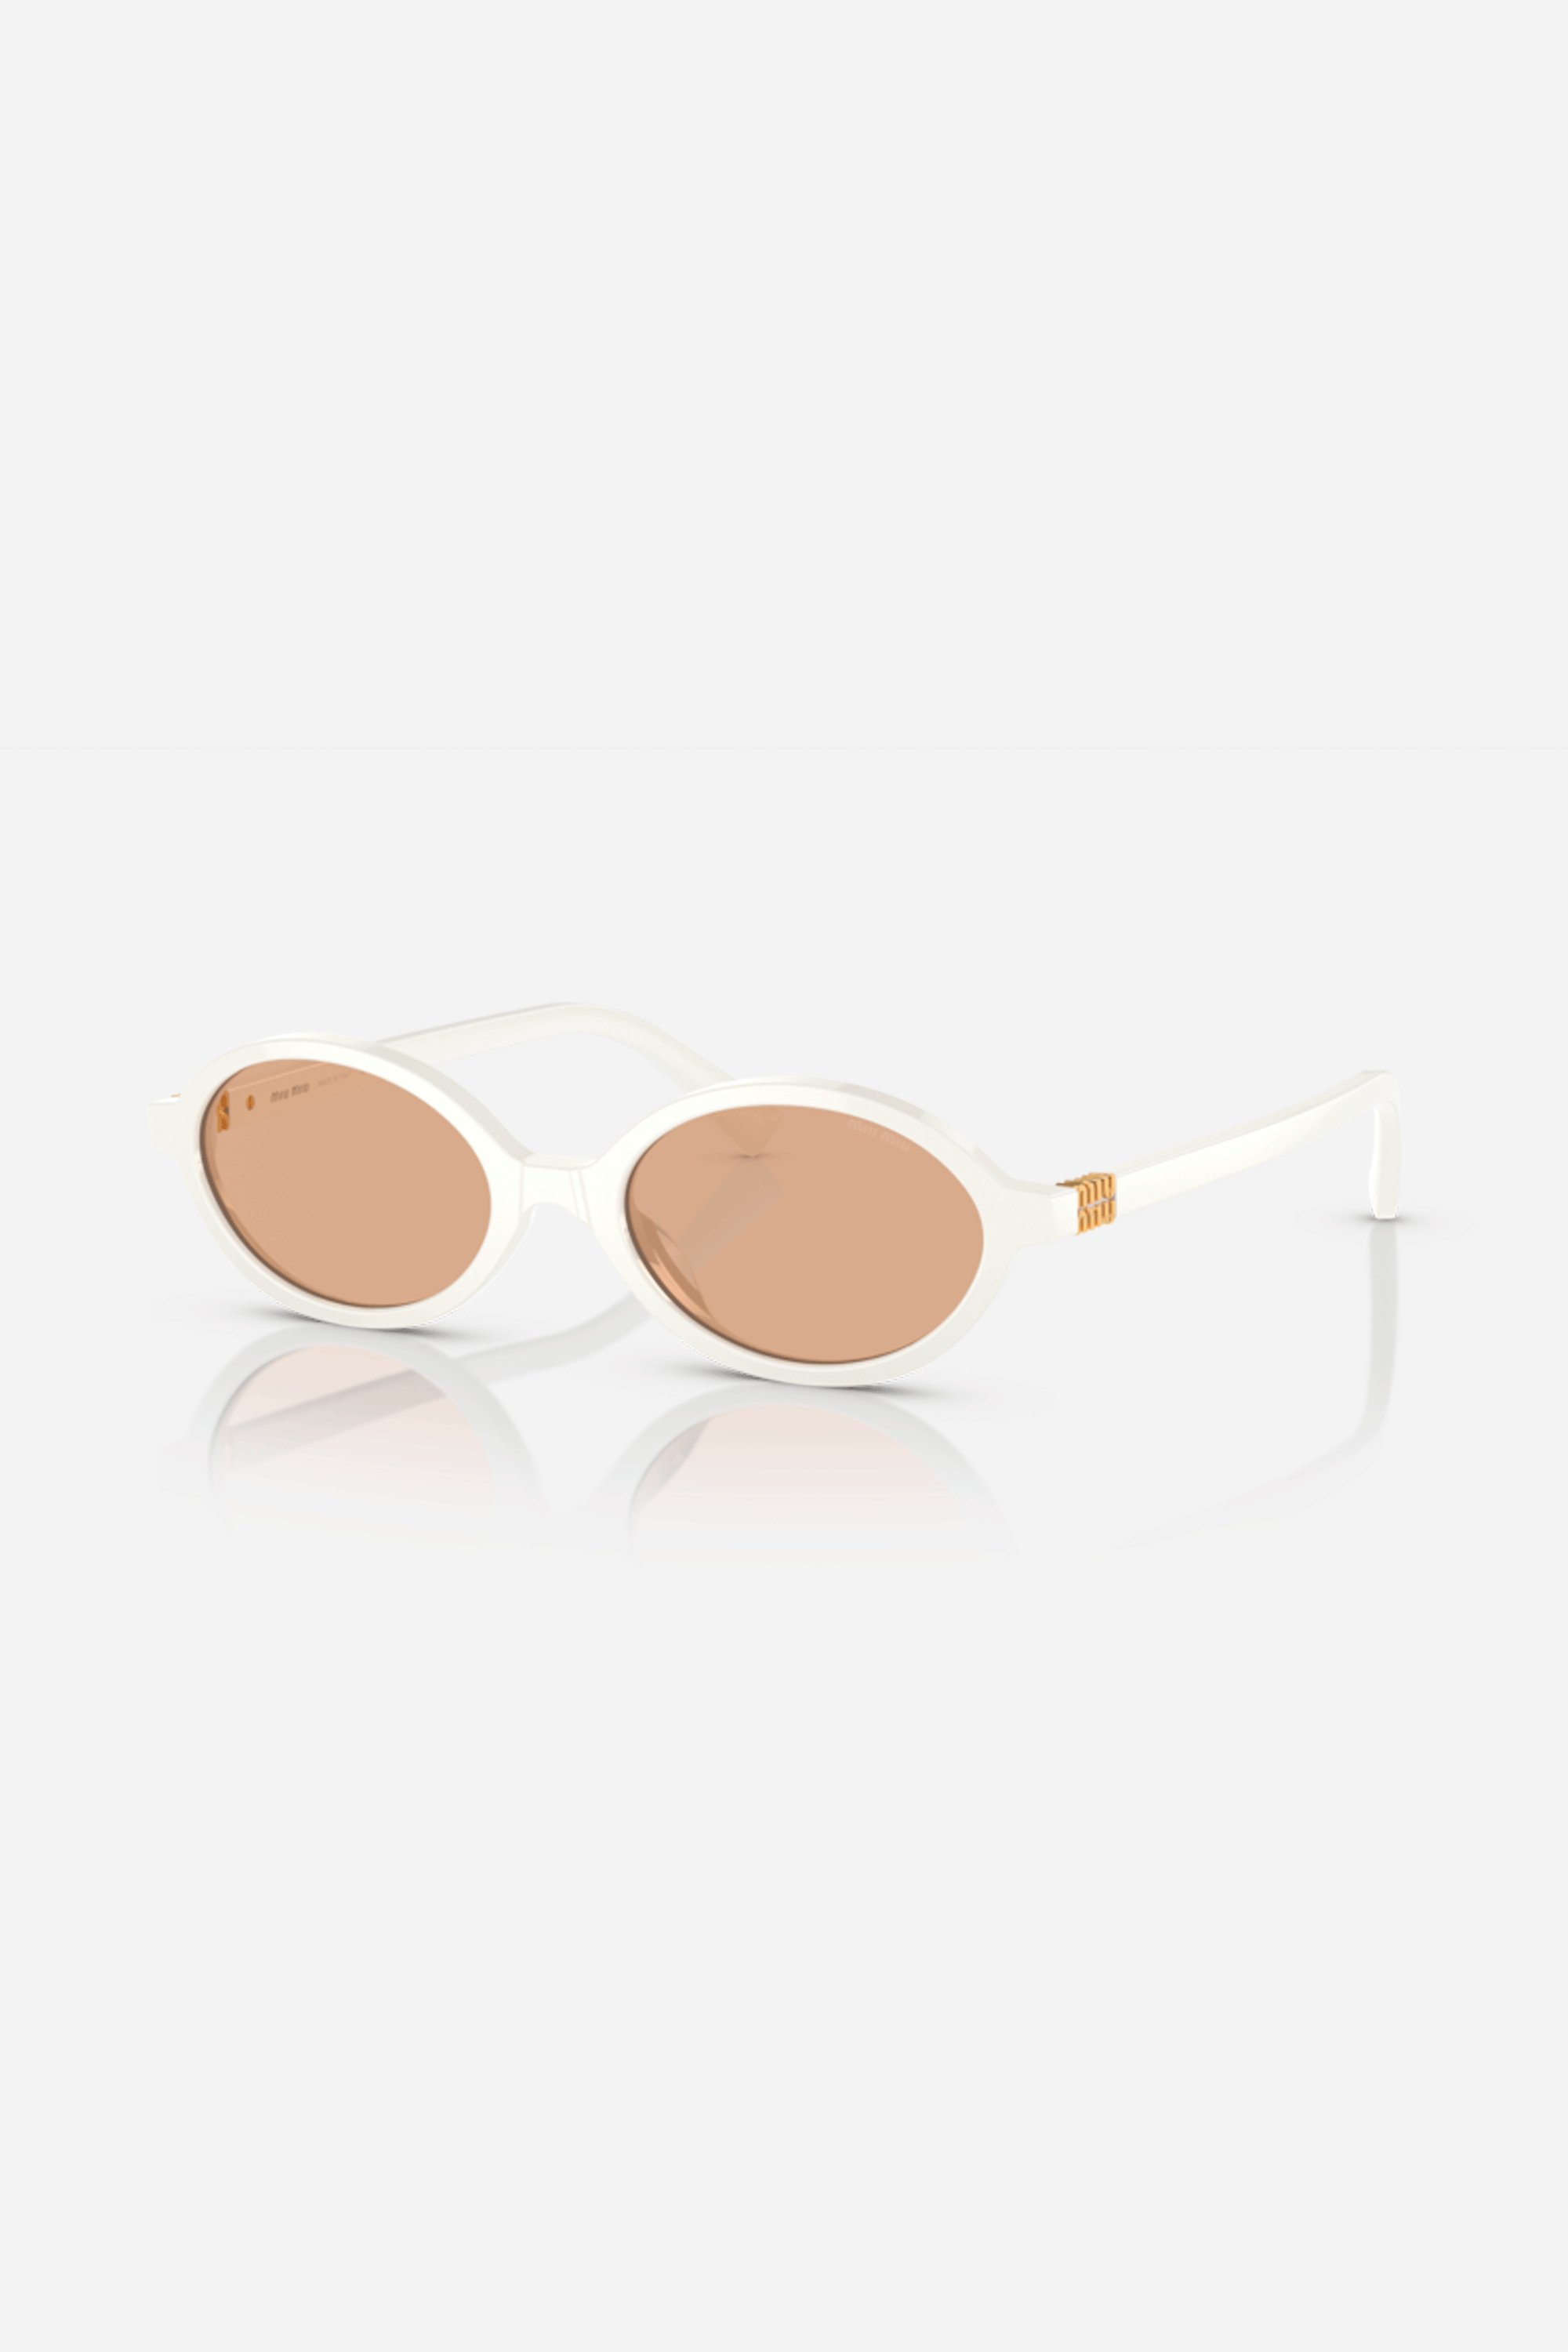 Miu Miu oval acetate white sunglasses - Eyewear Club